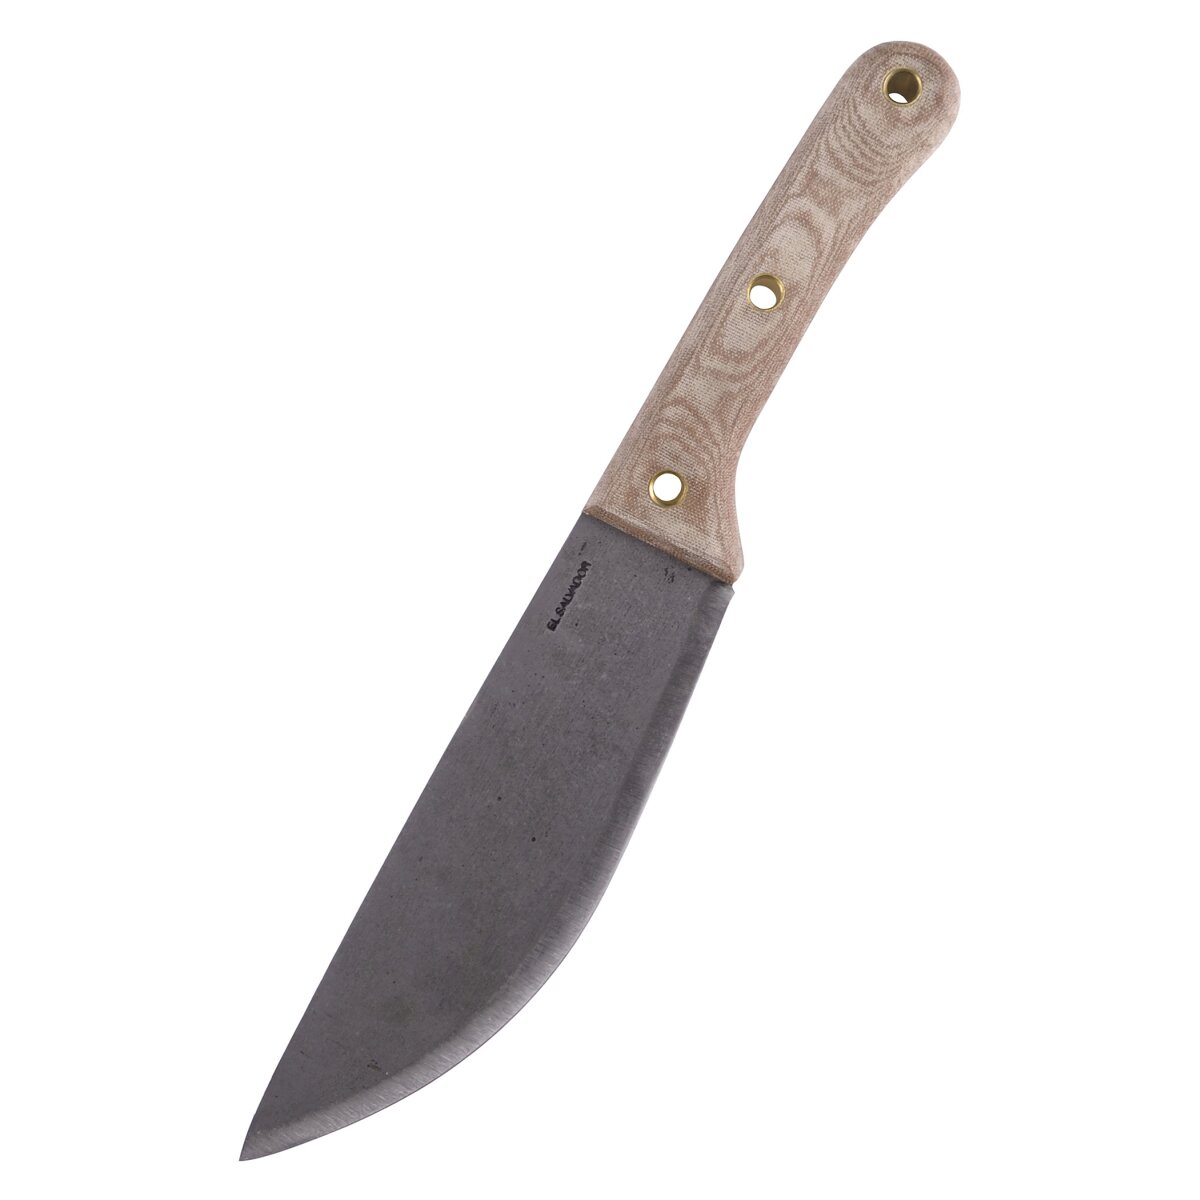 Primitive Sequoia knife, hunting knife, Condor